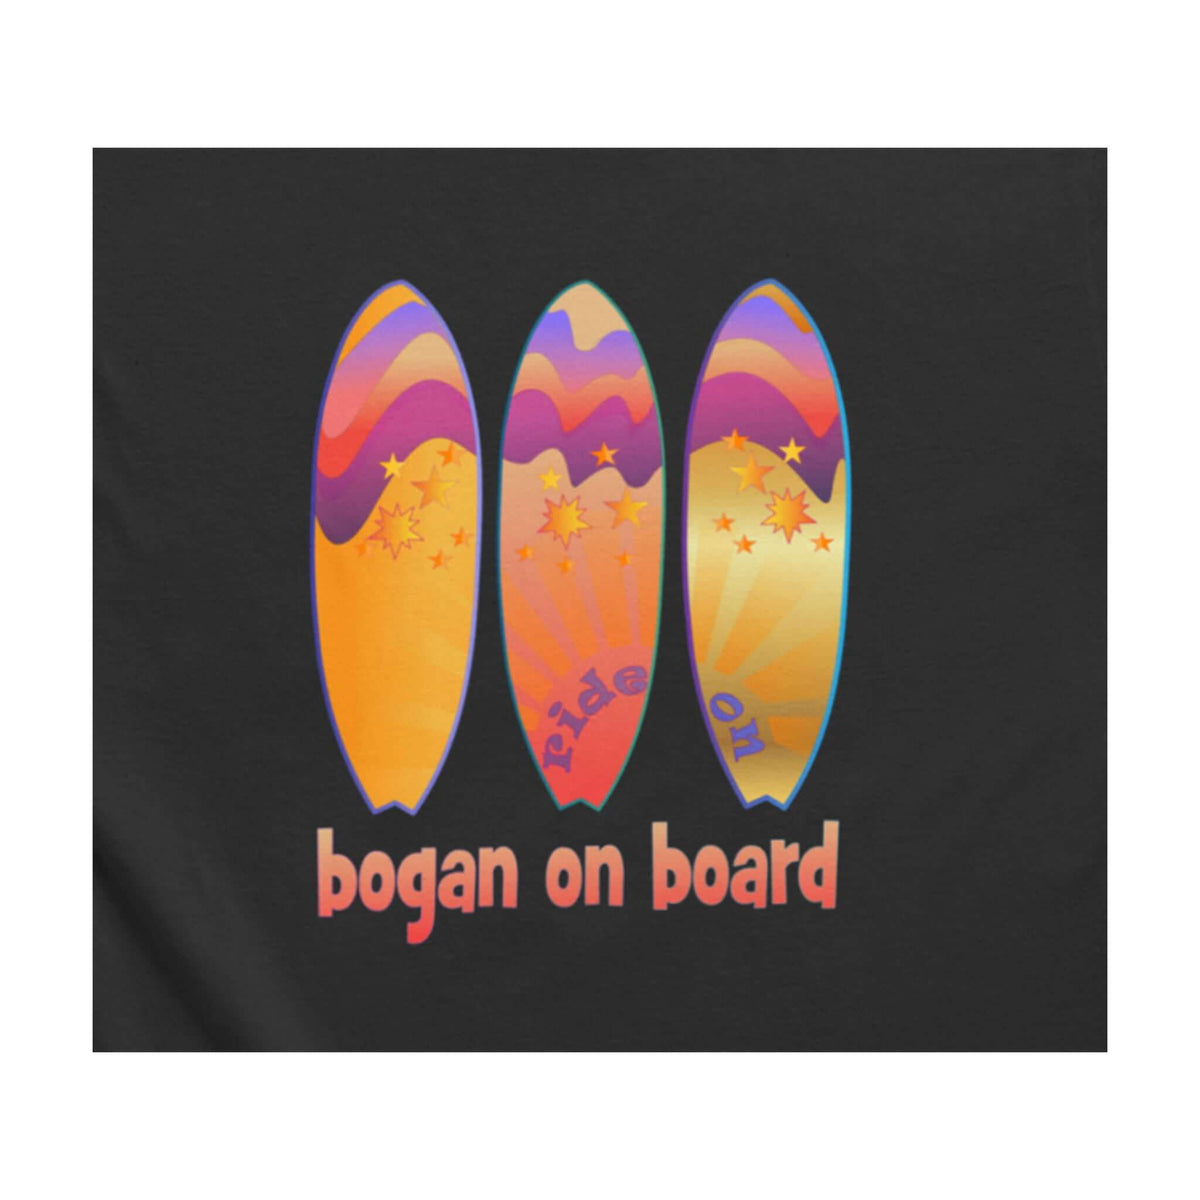 Bright colour surf design on black background